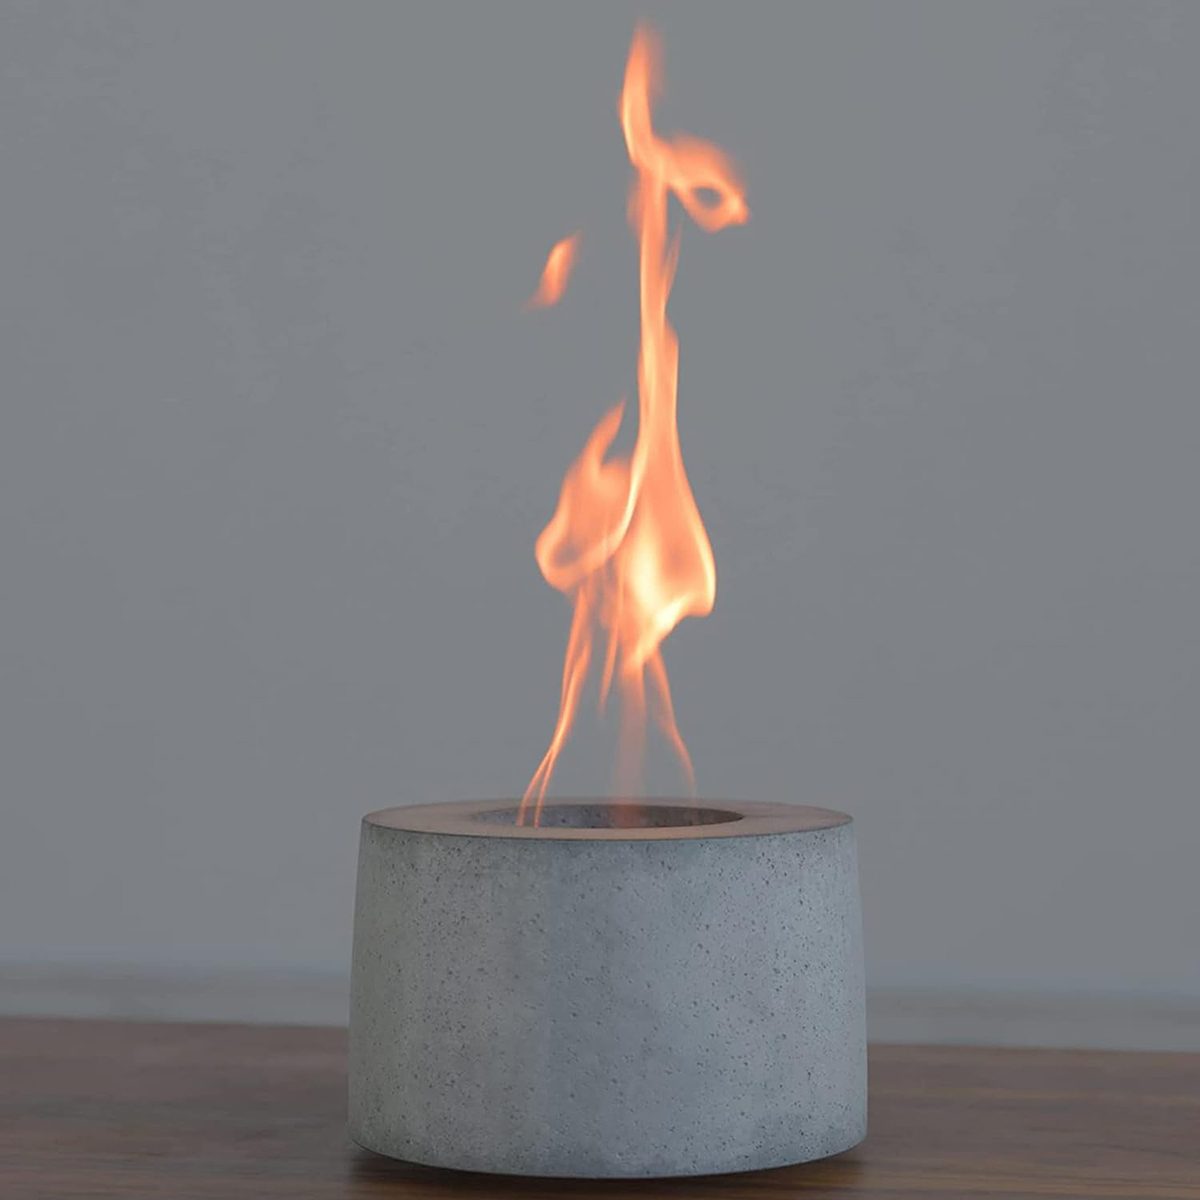 Colsen Tabletop Fireplace Ecomm Via Amazon.com